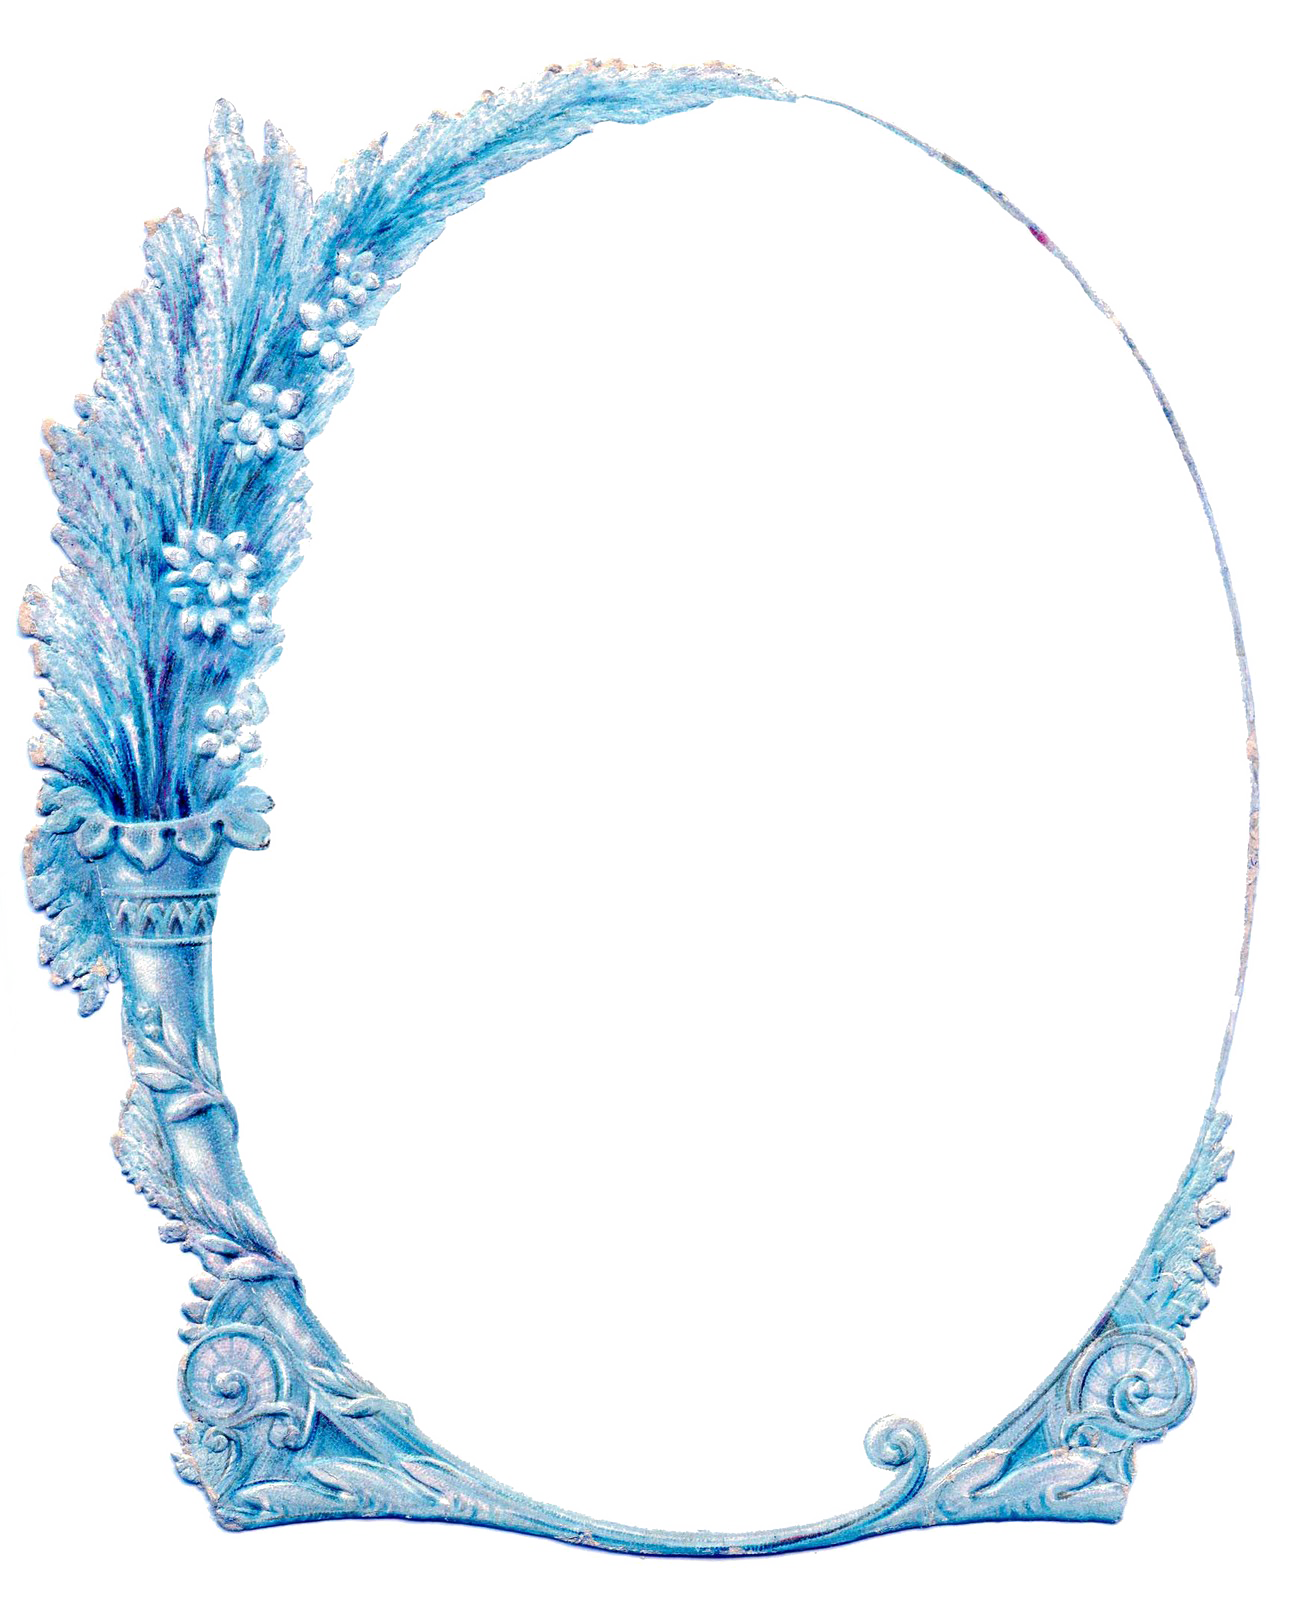 Turquoise Floral Border PNG Télécharger limage